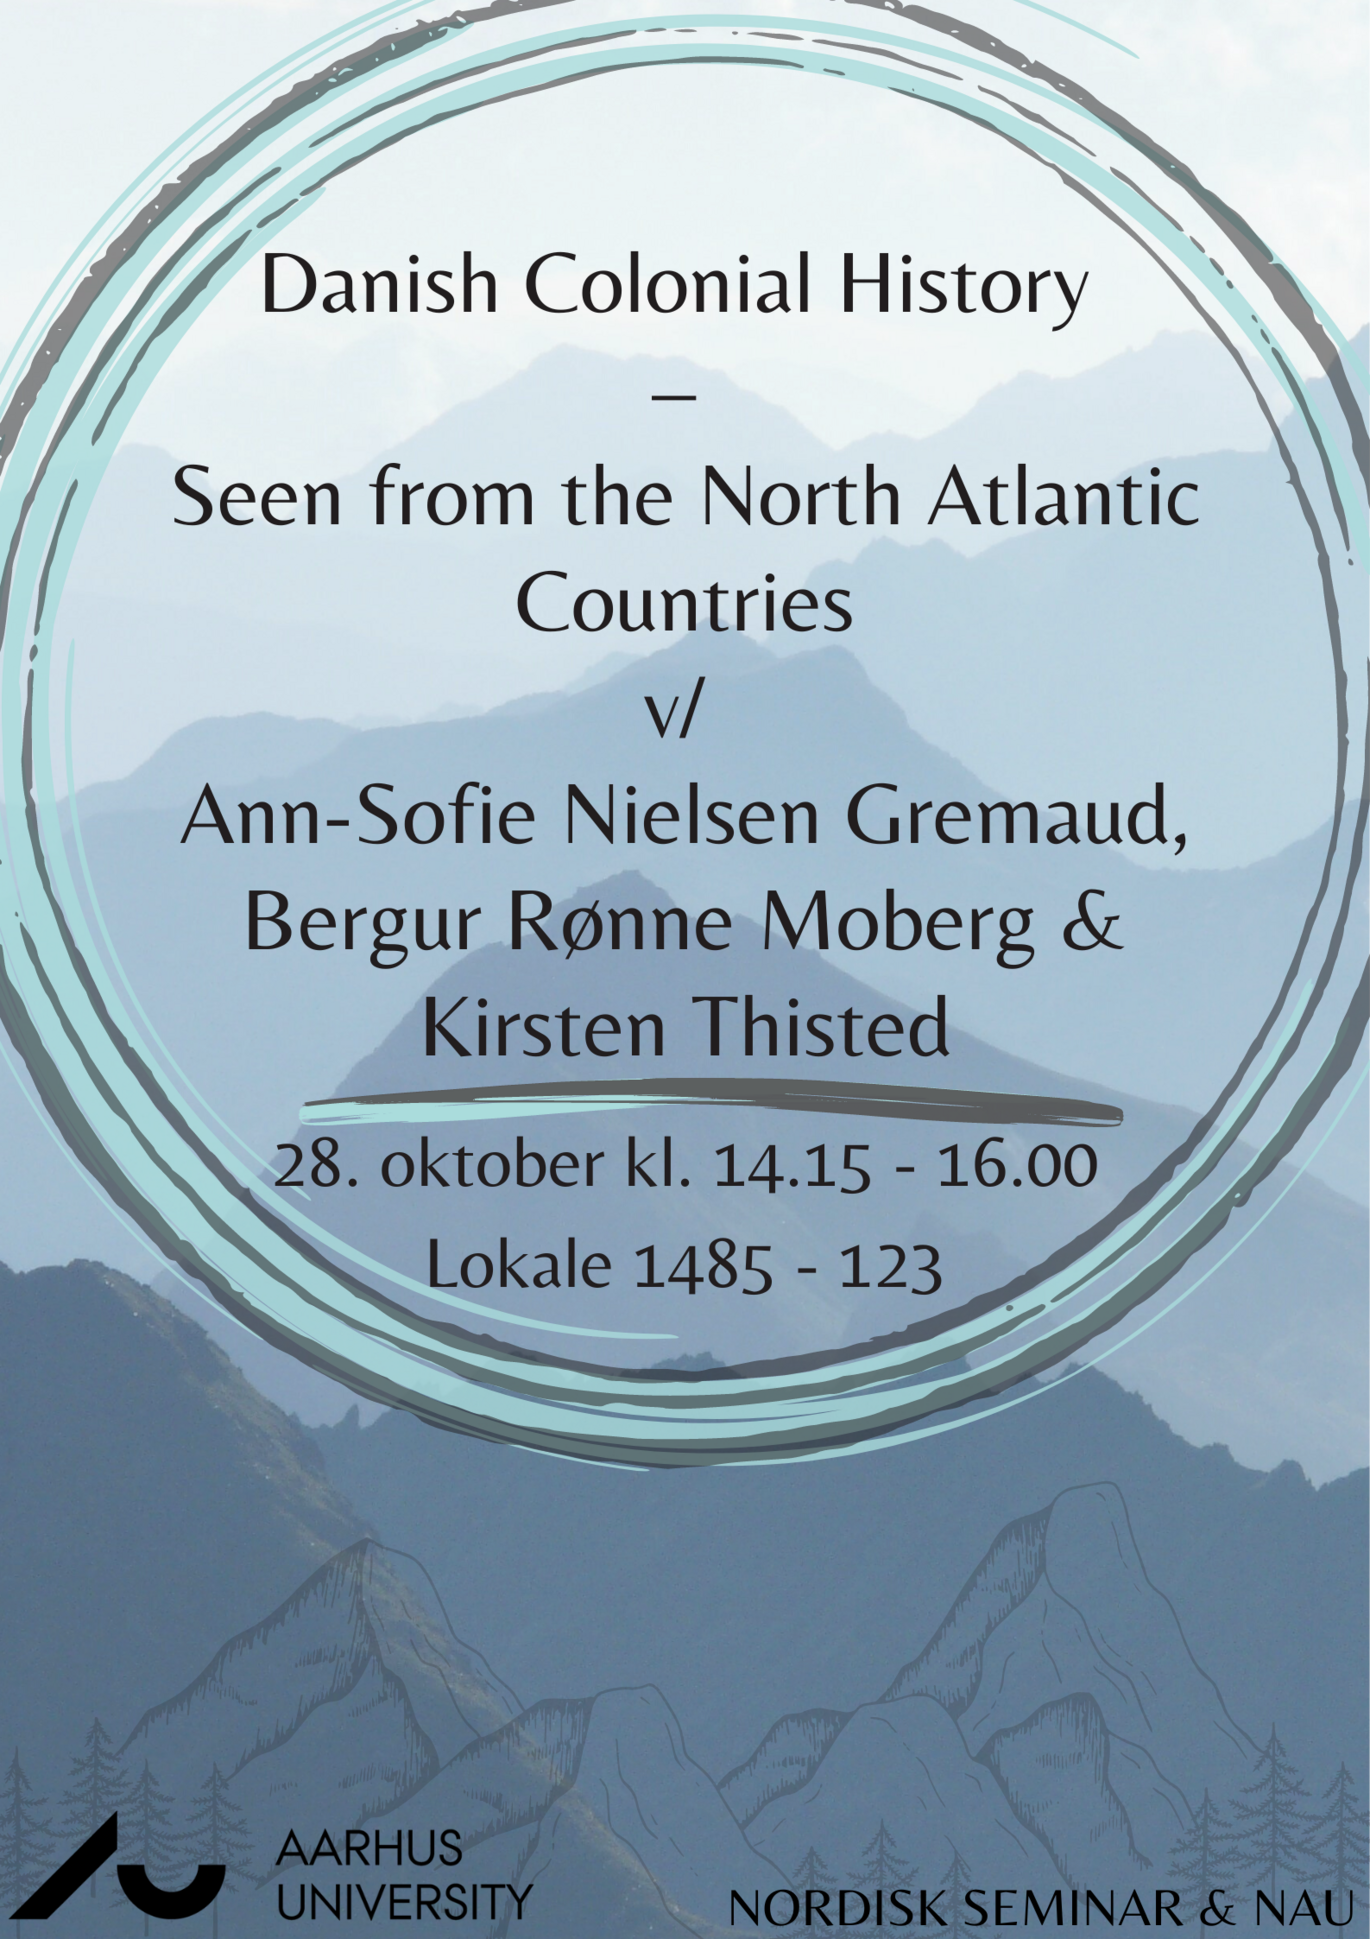 Nordisk Seminar & NAU. Danish Colonial History - seen from the North Atlantic Countries v/ Ann-Sofie Nielsen Grmeaud, Bergur Rønne Moberg & Karen Thisted. 28. oktober kl. 14:15-16. Lokale 1485-123.